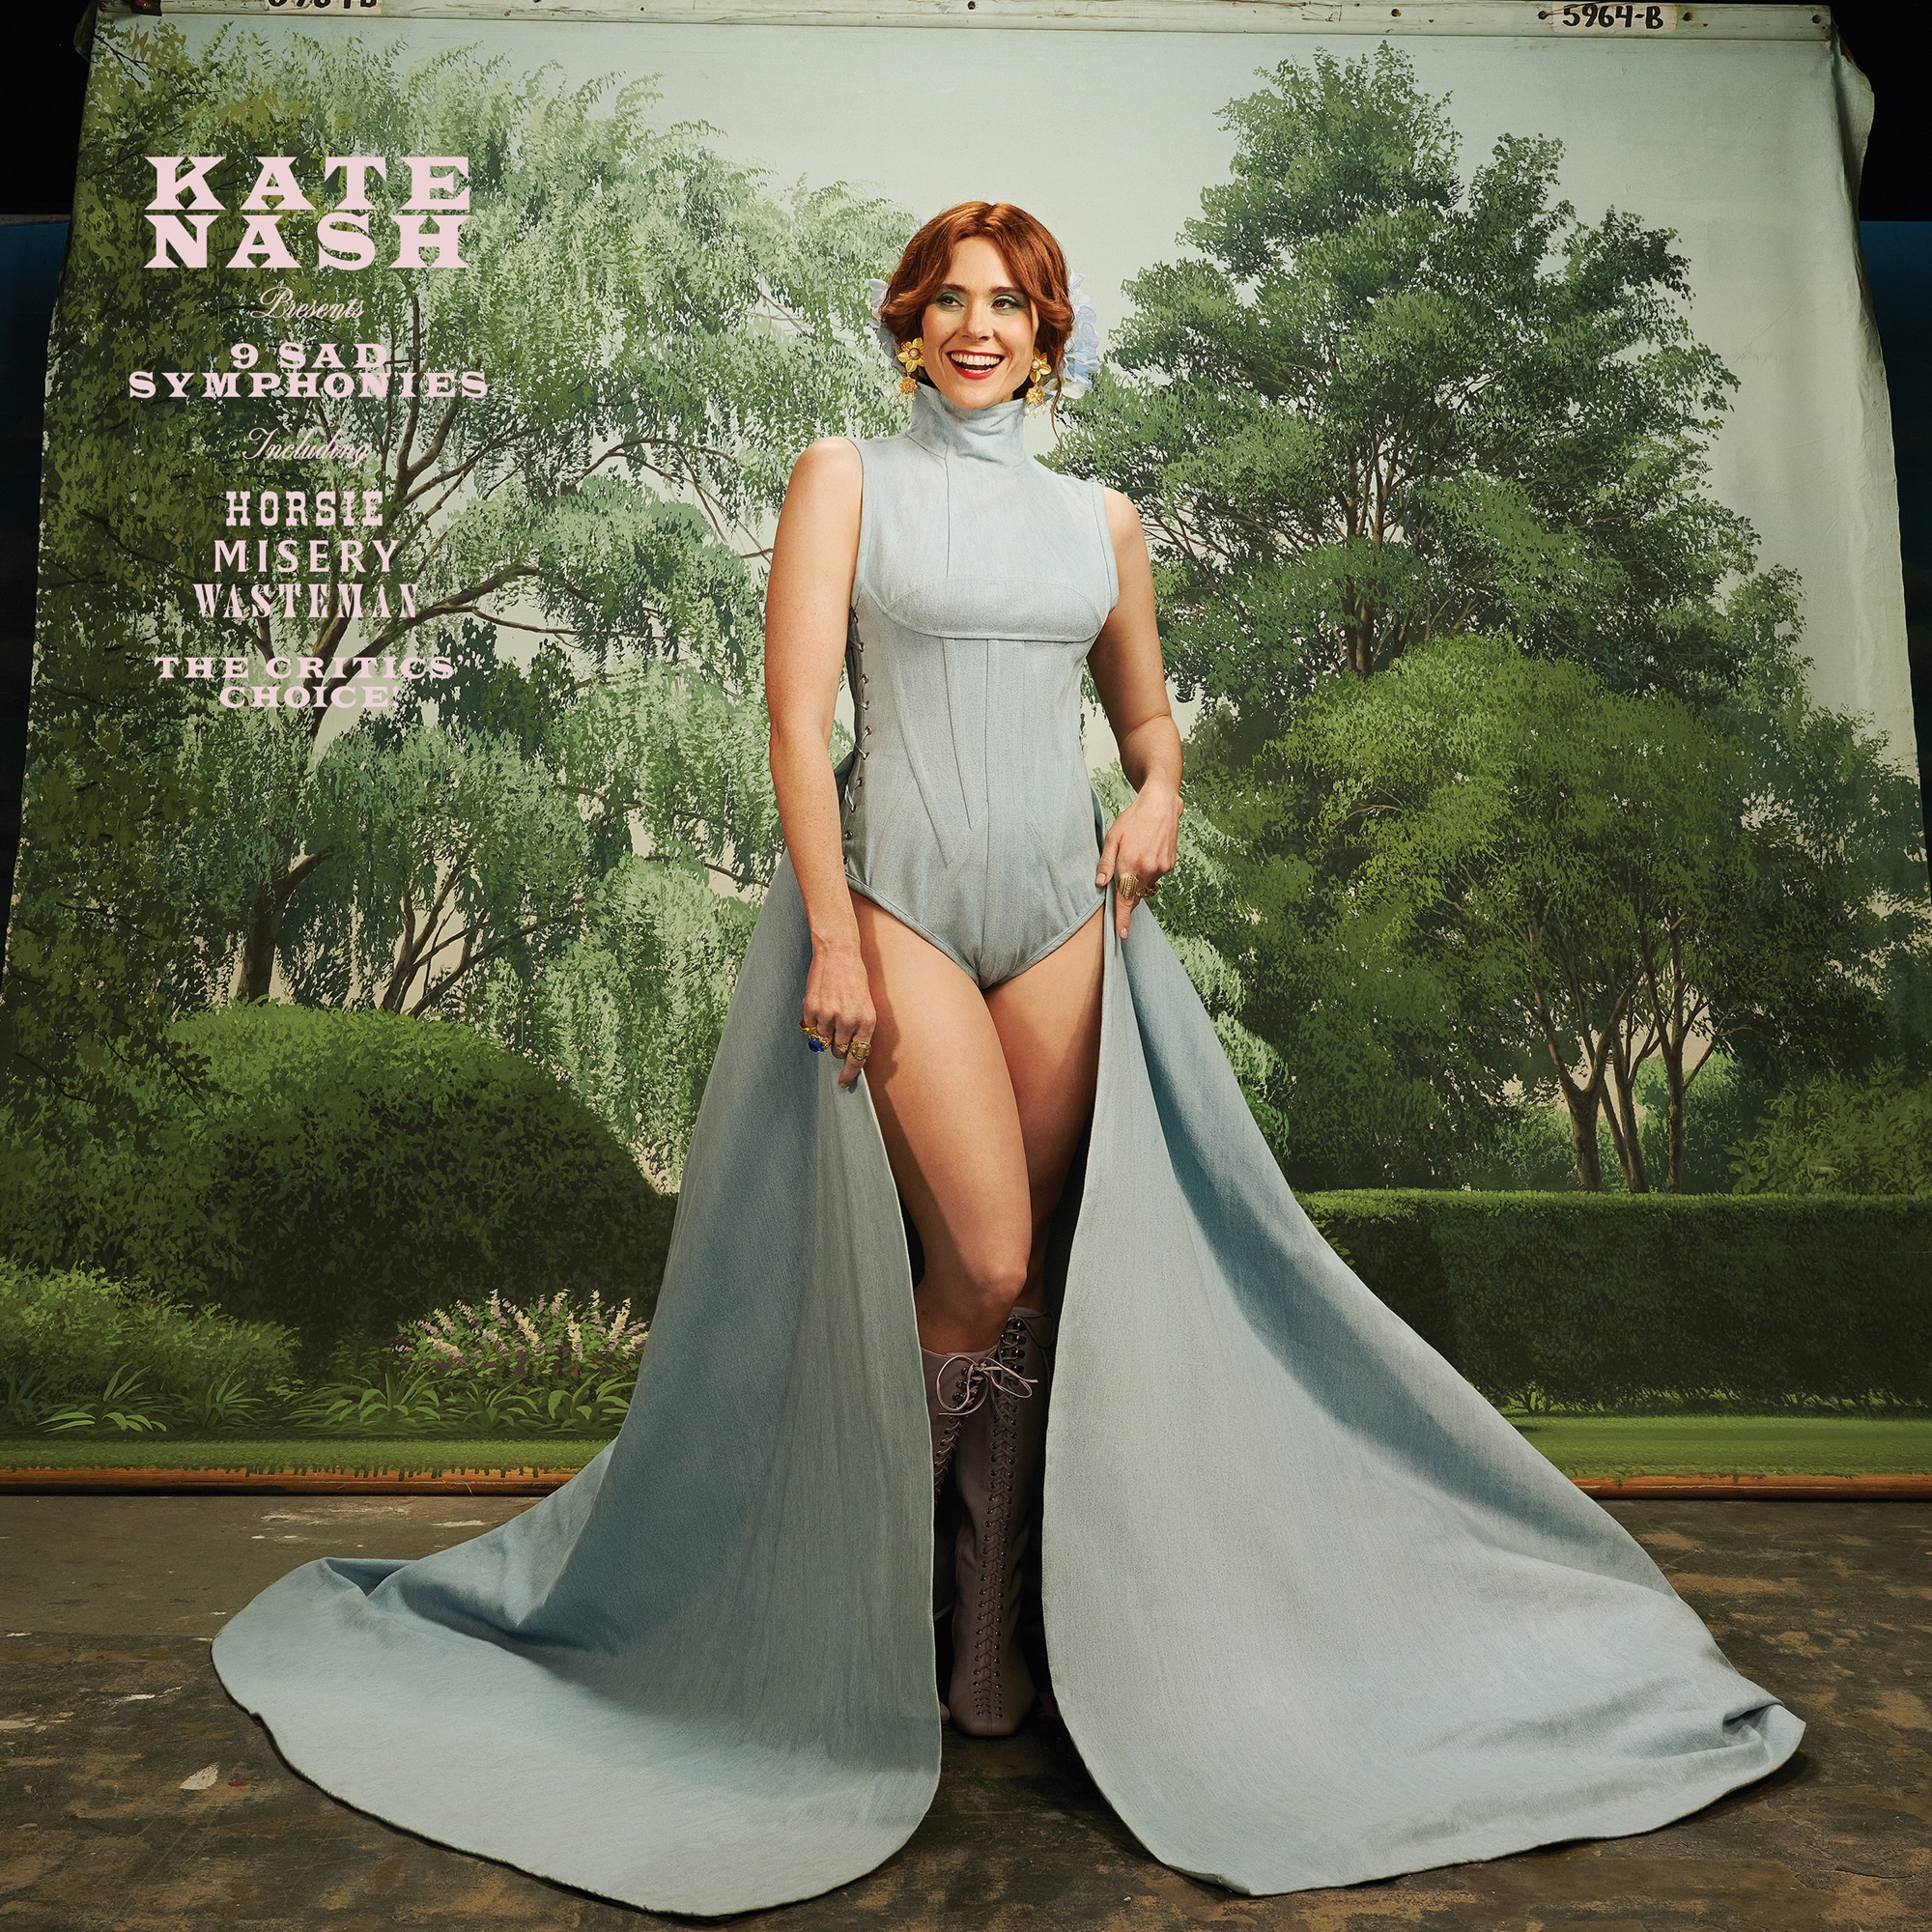 Kate Nash 9 Sad Symphonies cover artwork